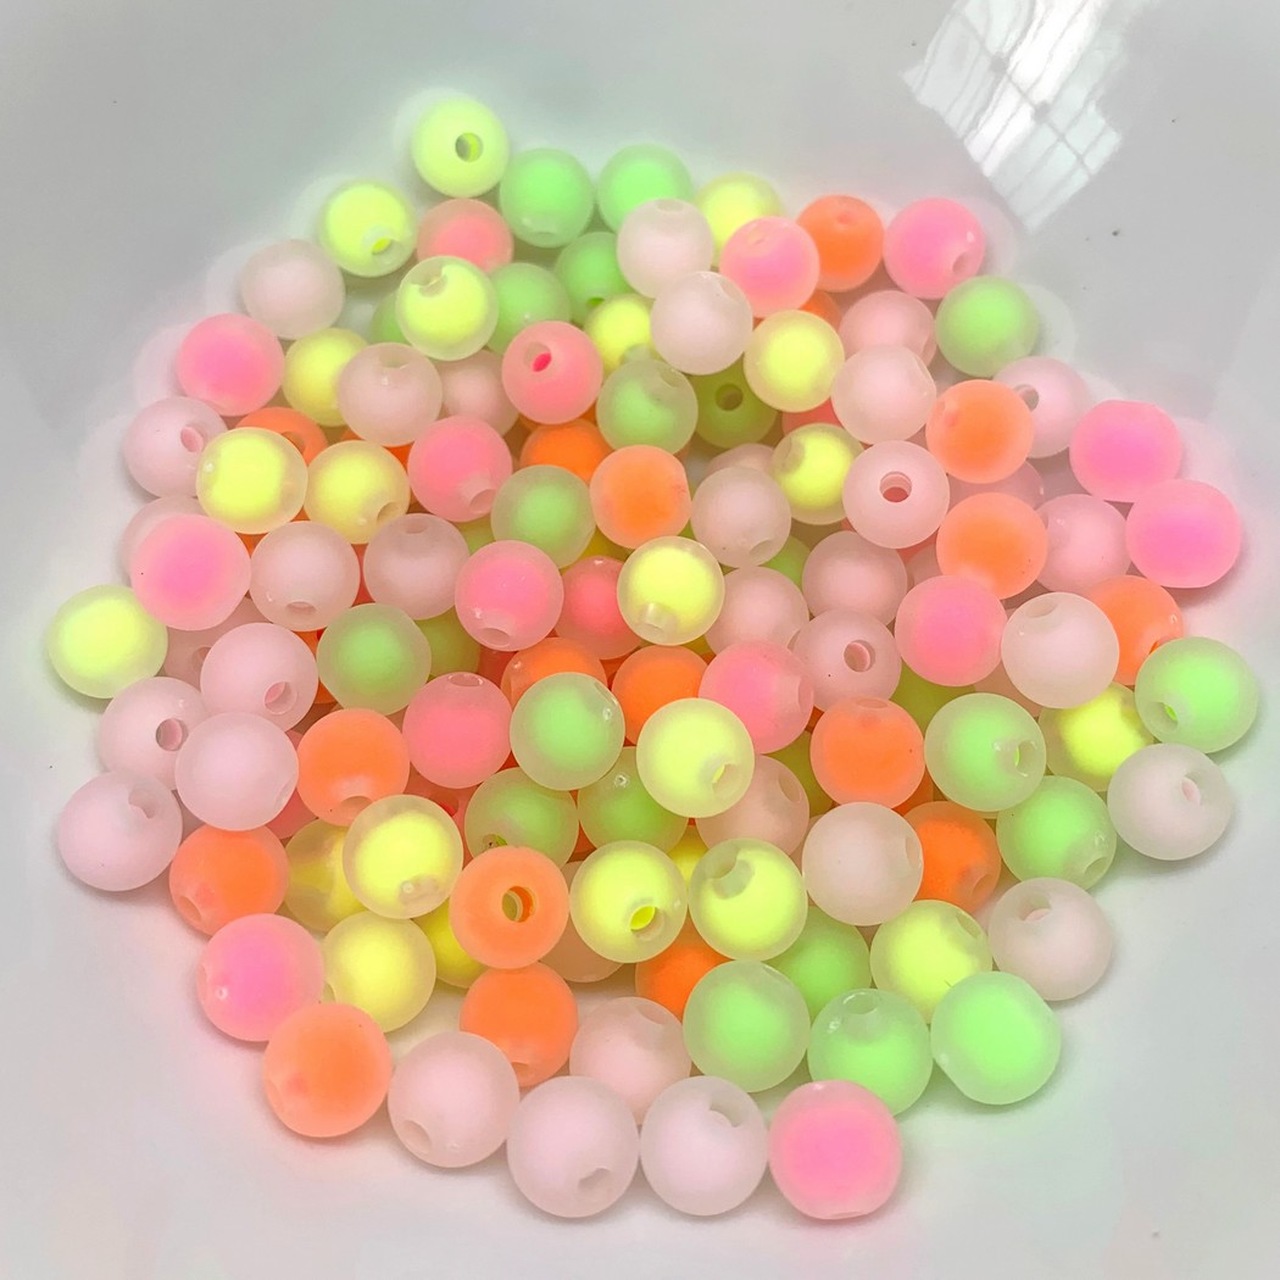 bola translucida colorida transparente com furo colorido neon 8mm 25 unidades